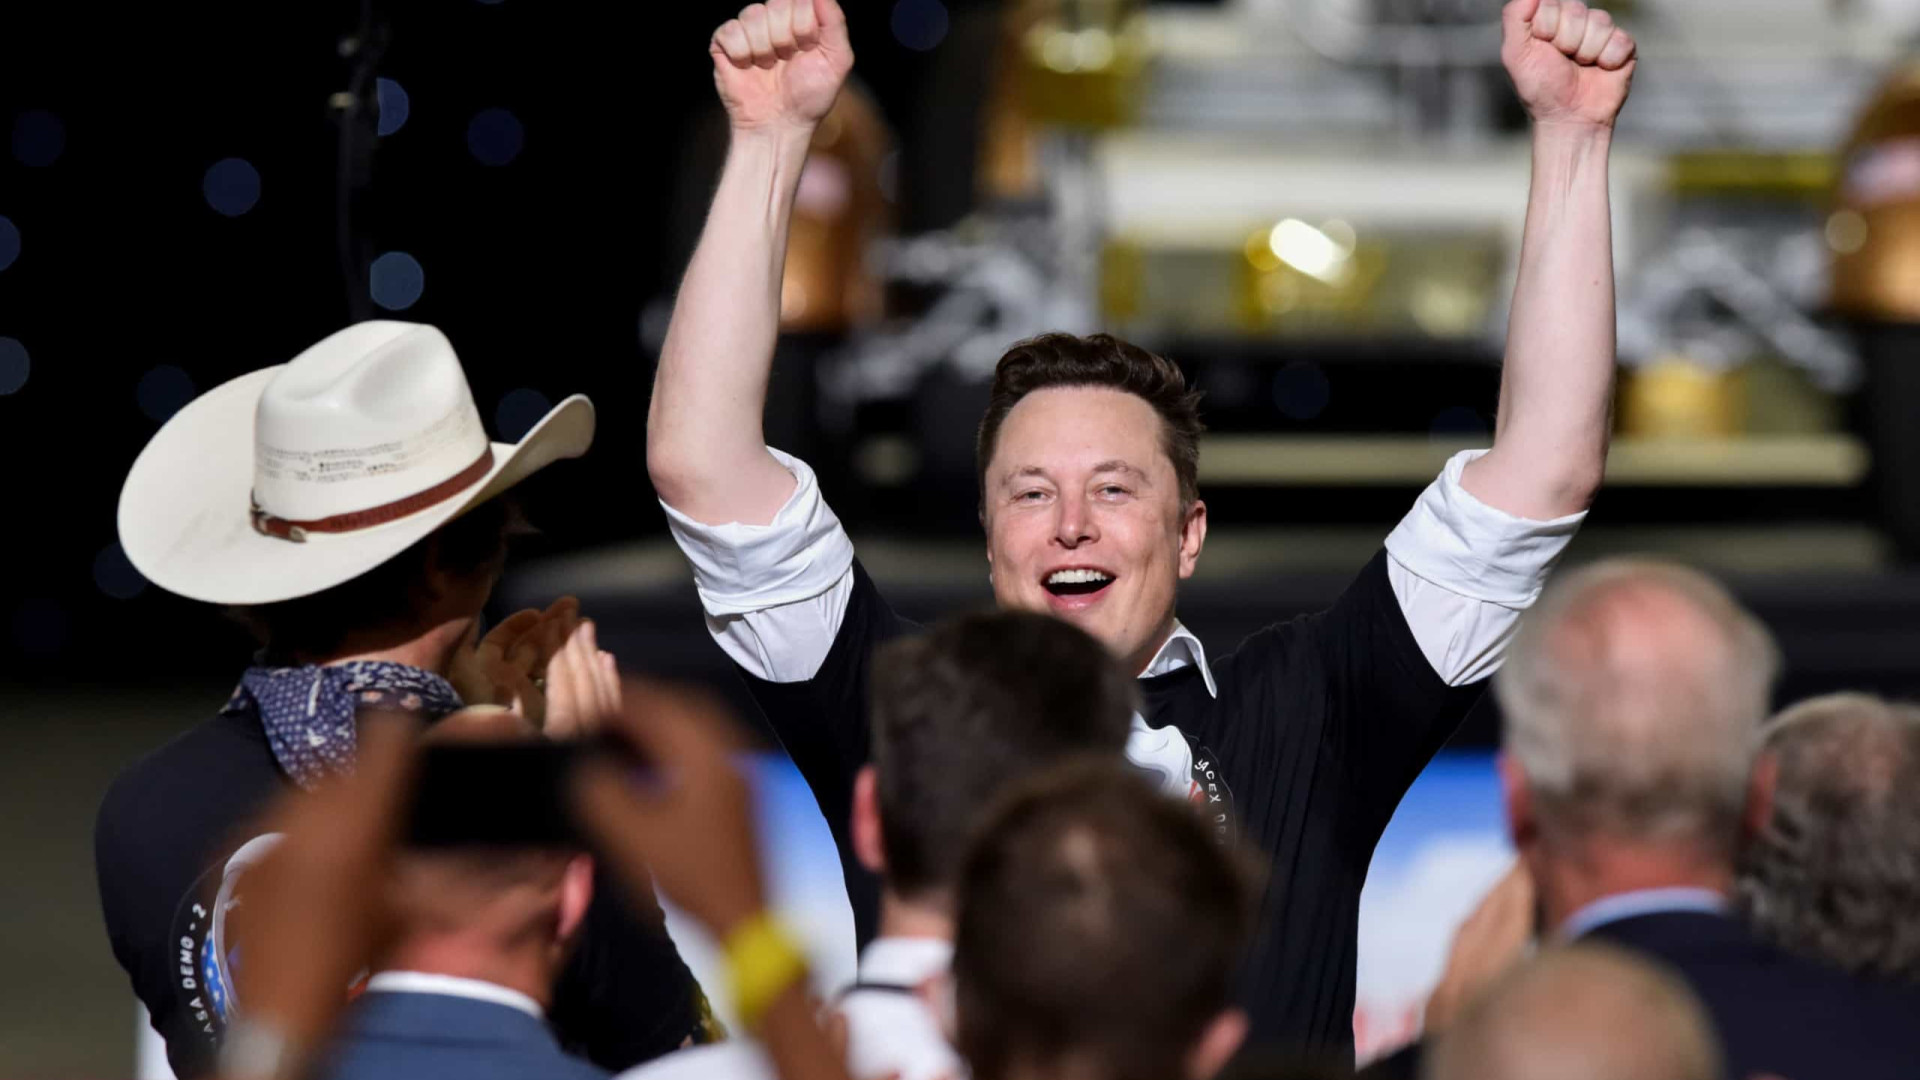 Elon Musk ultrapassou Zuckerberg na lista dos mais ricos do mundo